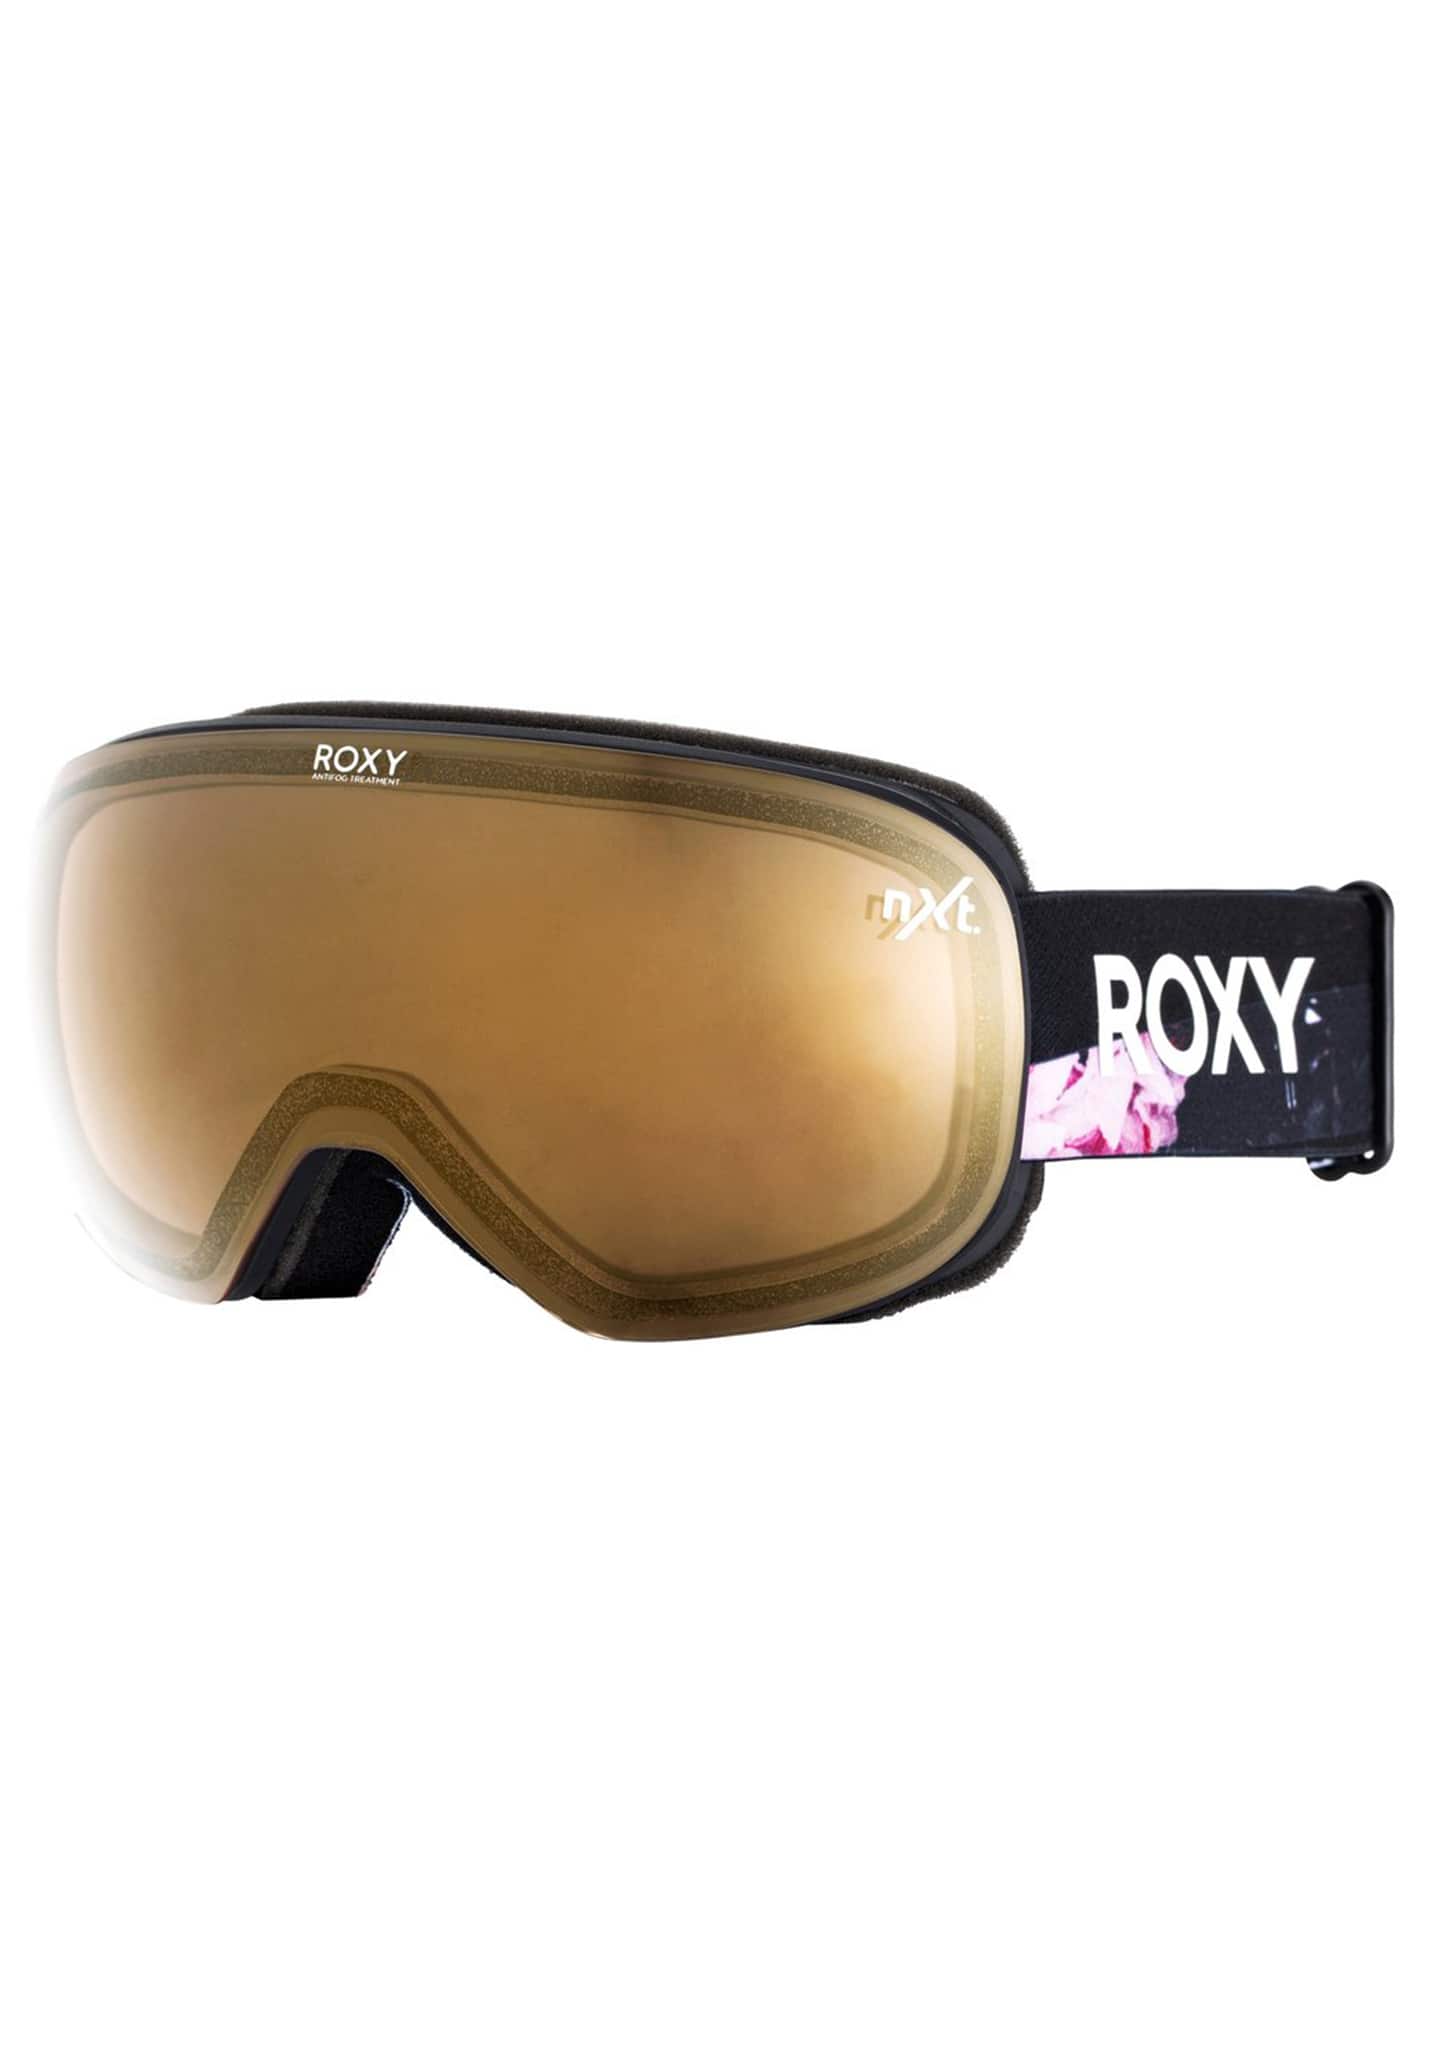 Roxy Popscreen Snowboardbrillen echte schwarze blühende party One Size